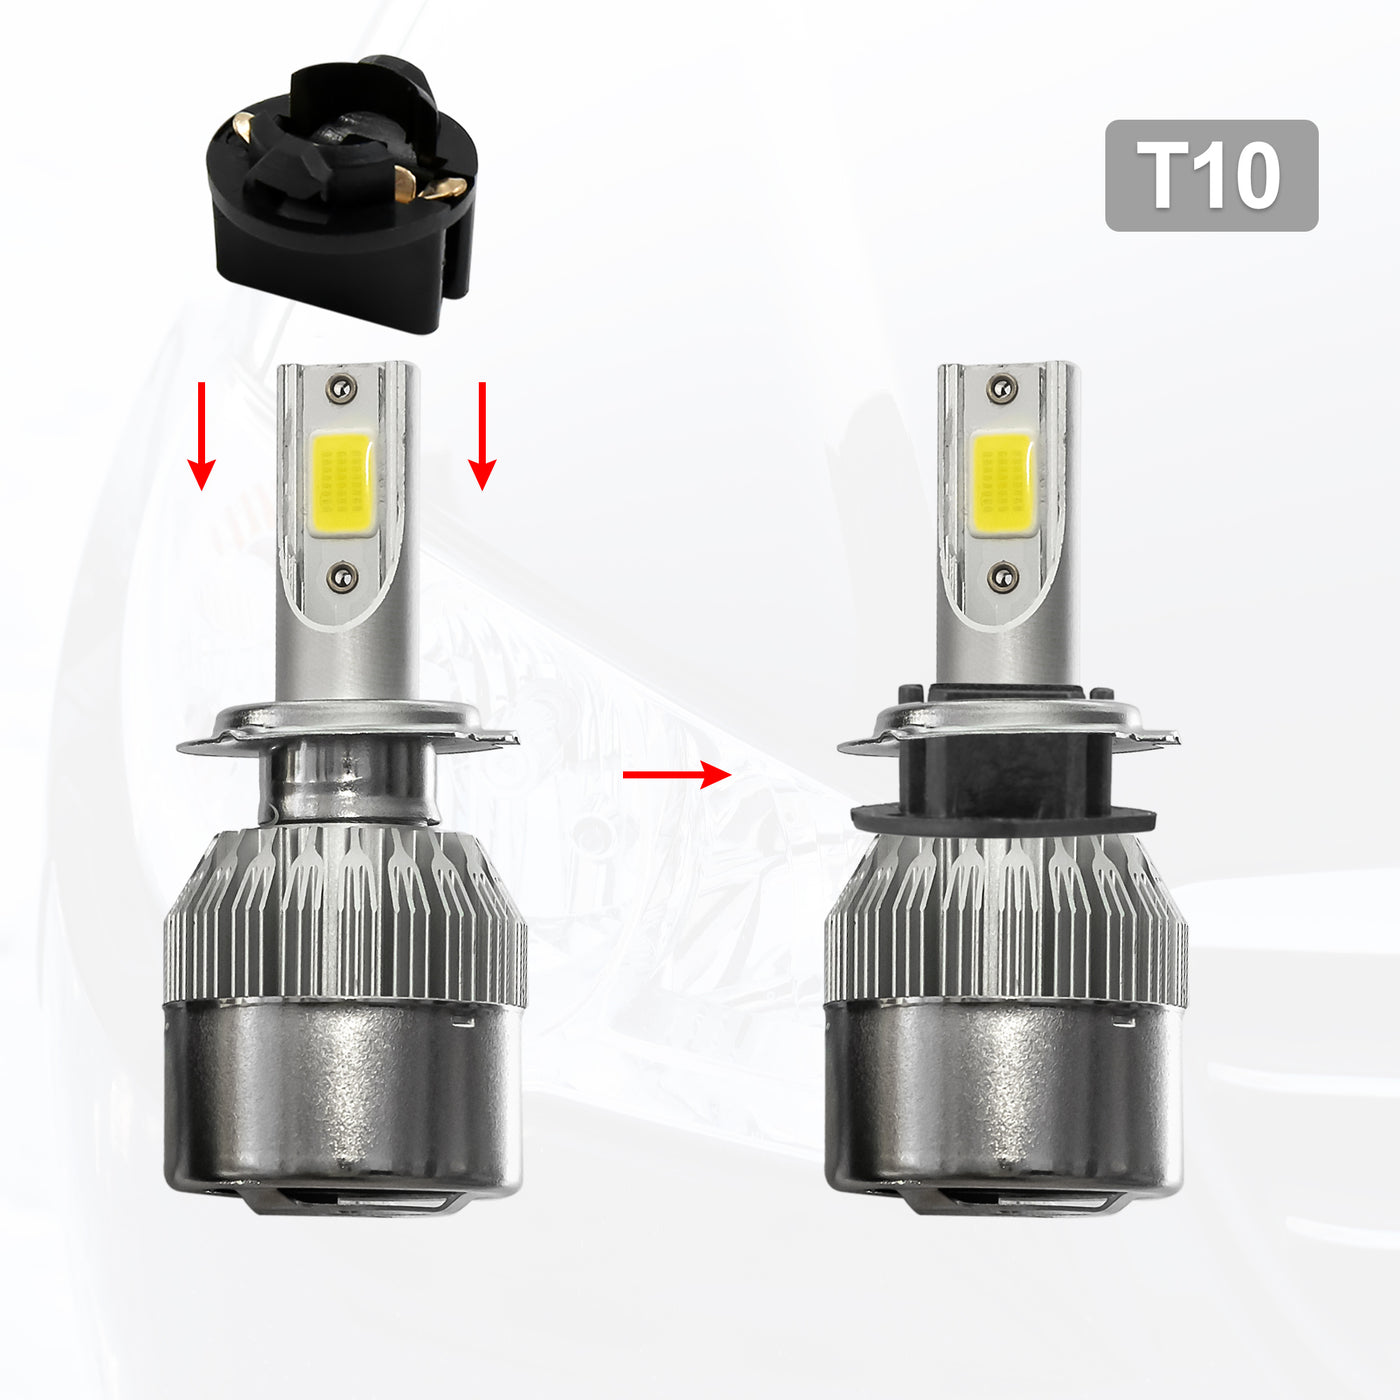 uxcell Uxcell 5pcs DC 12V T10 Twist Lock Base Socket Light Bulb Holder for Car Instrument Panel Dash Universal Black